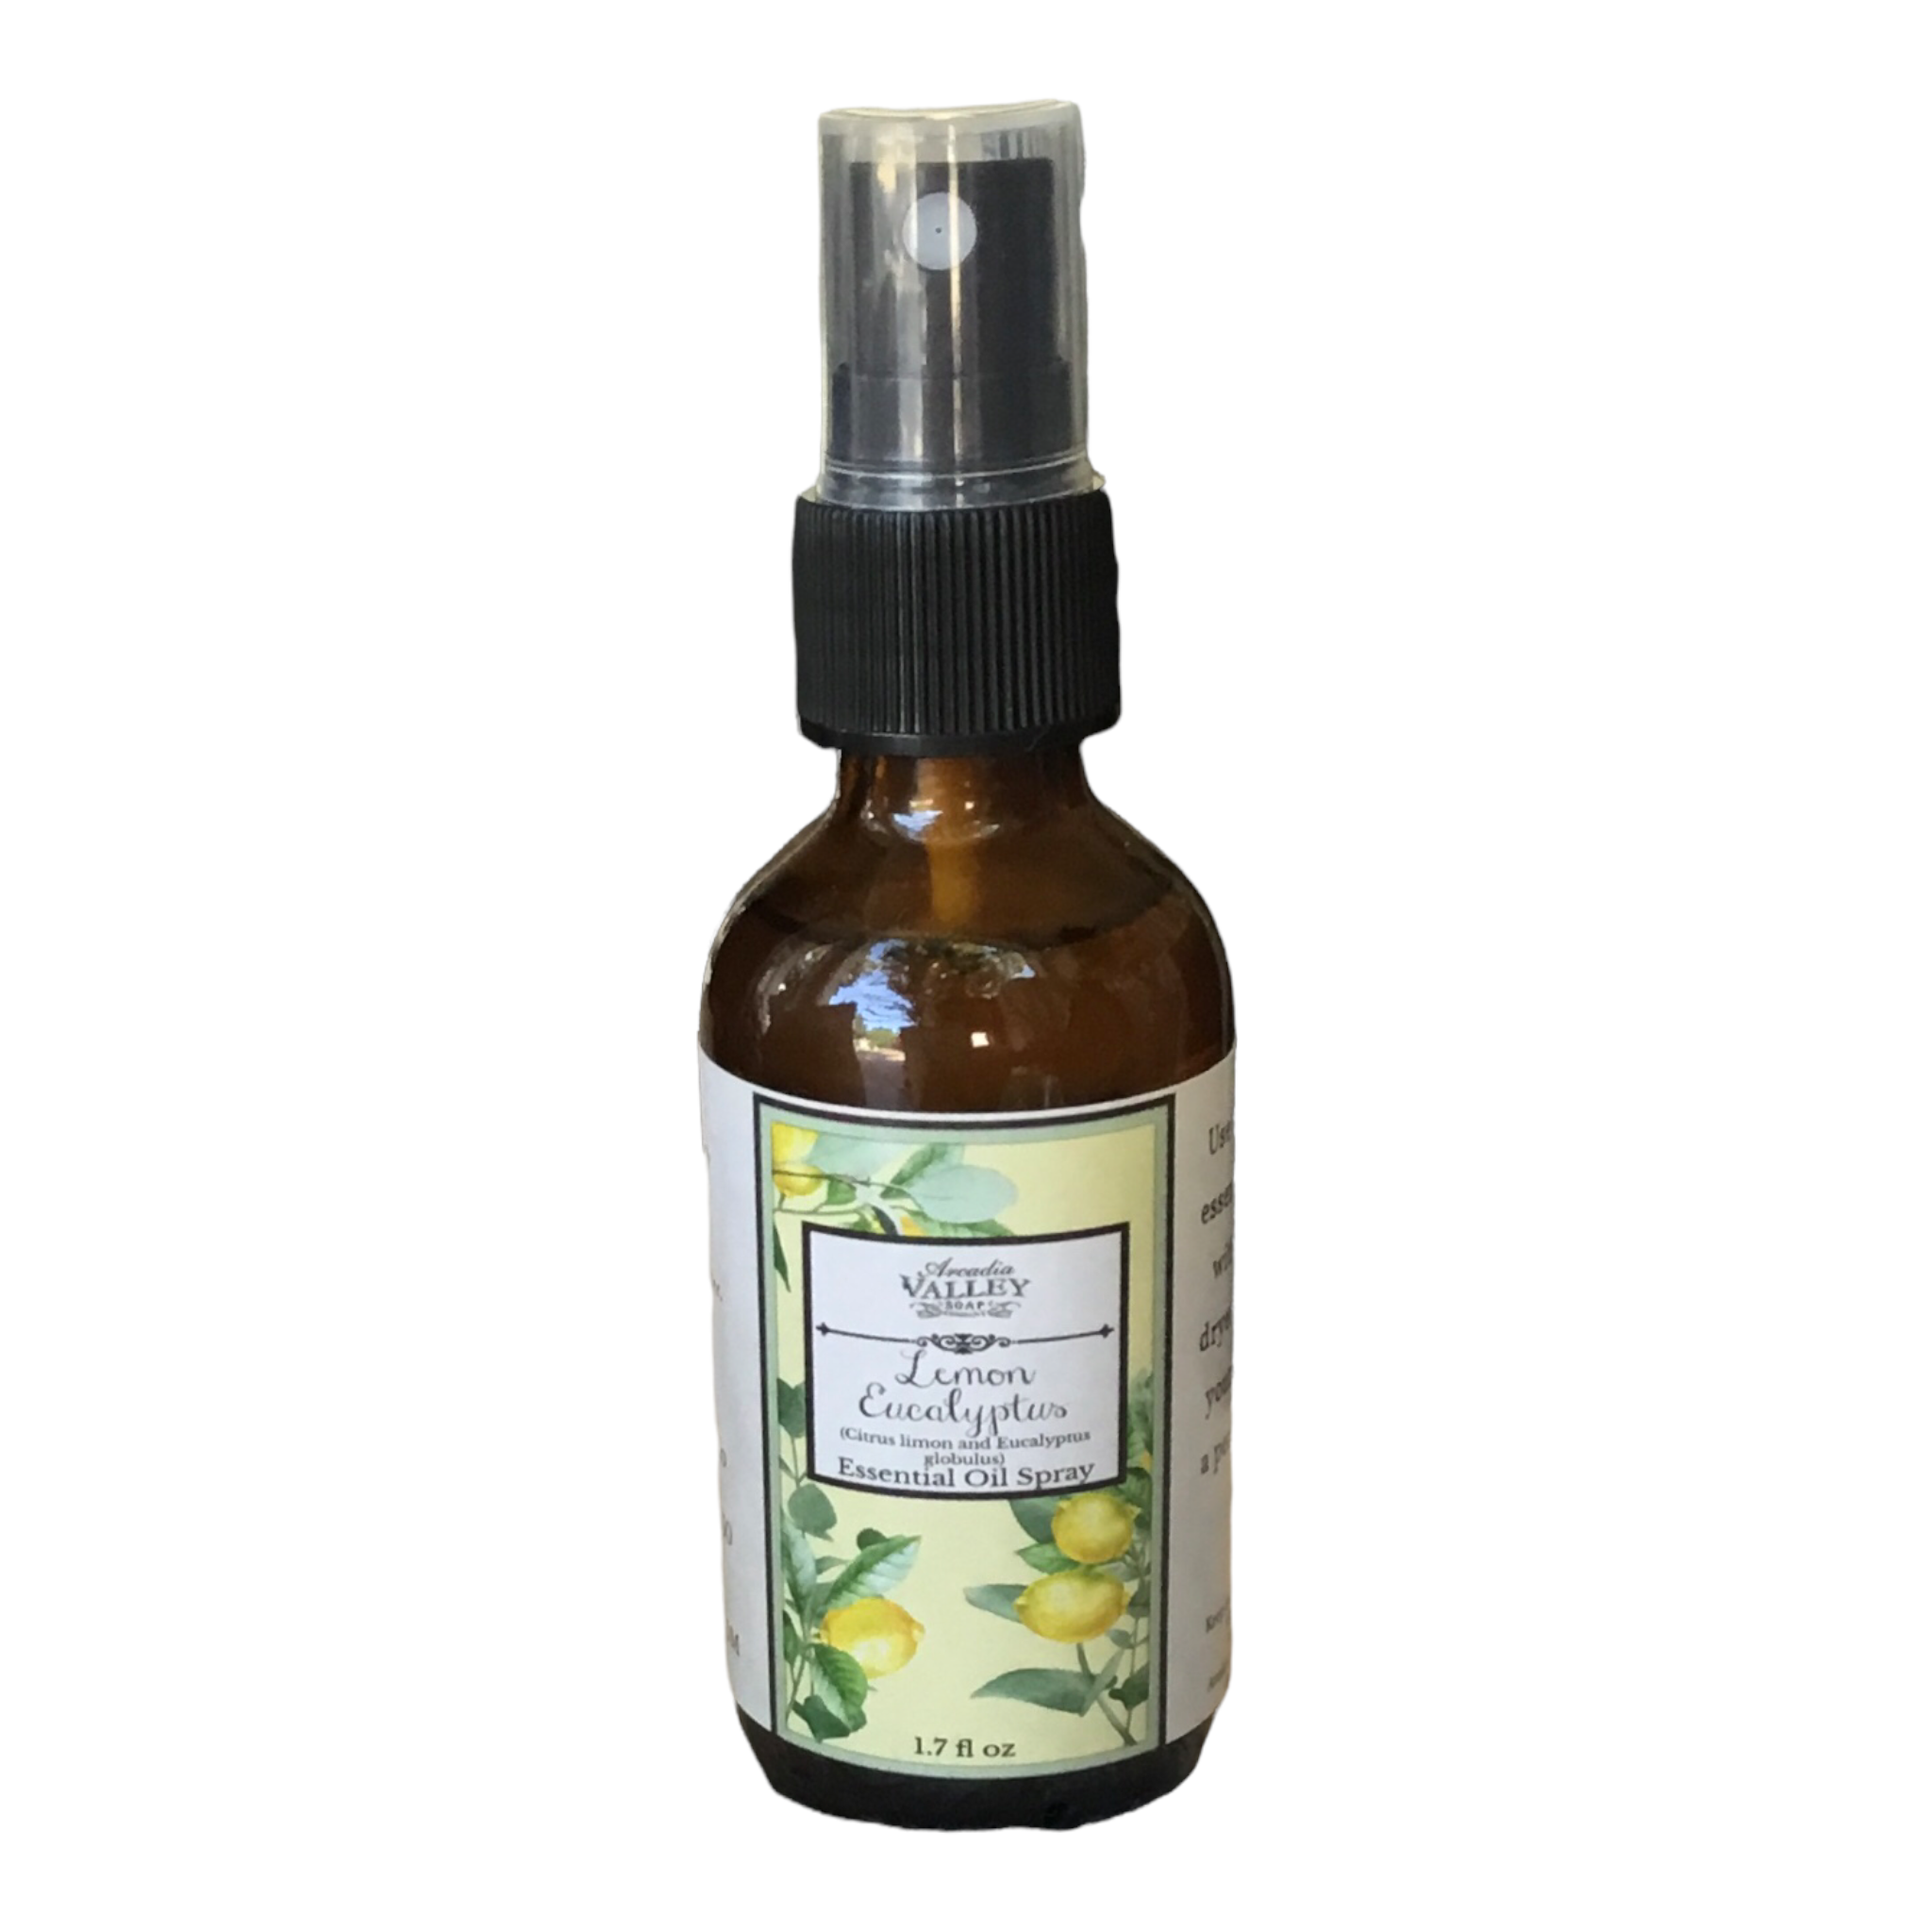 Lemon Eucalyptus Essential Oil Spray